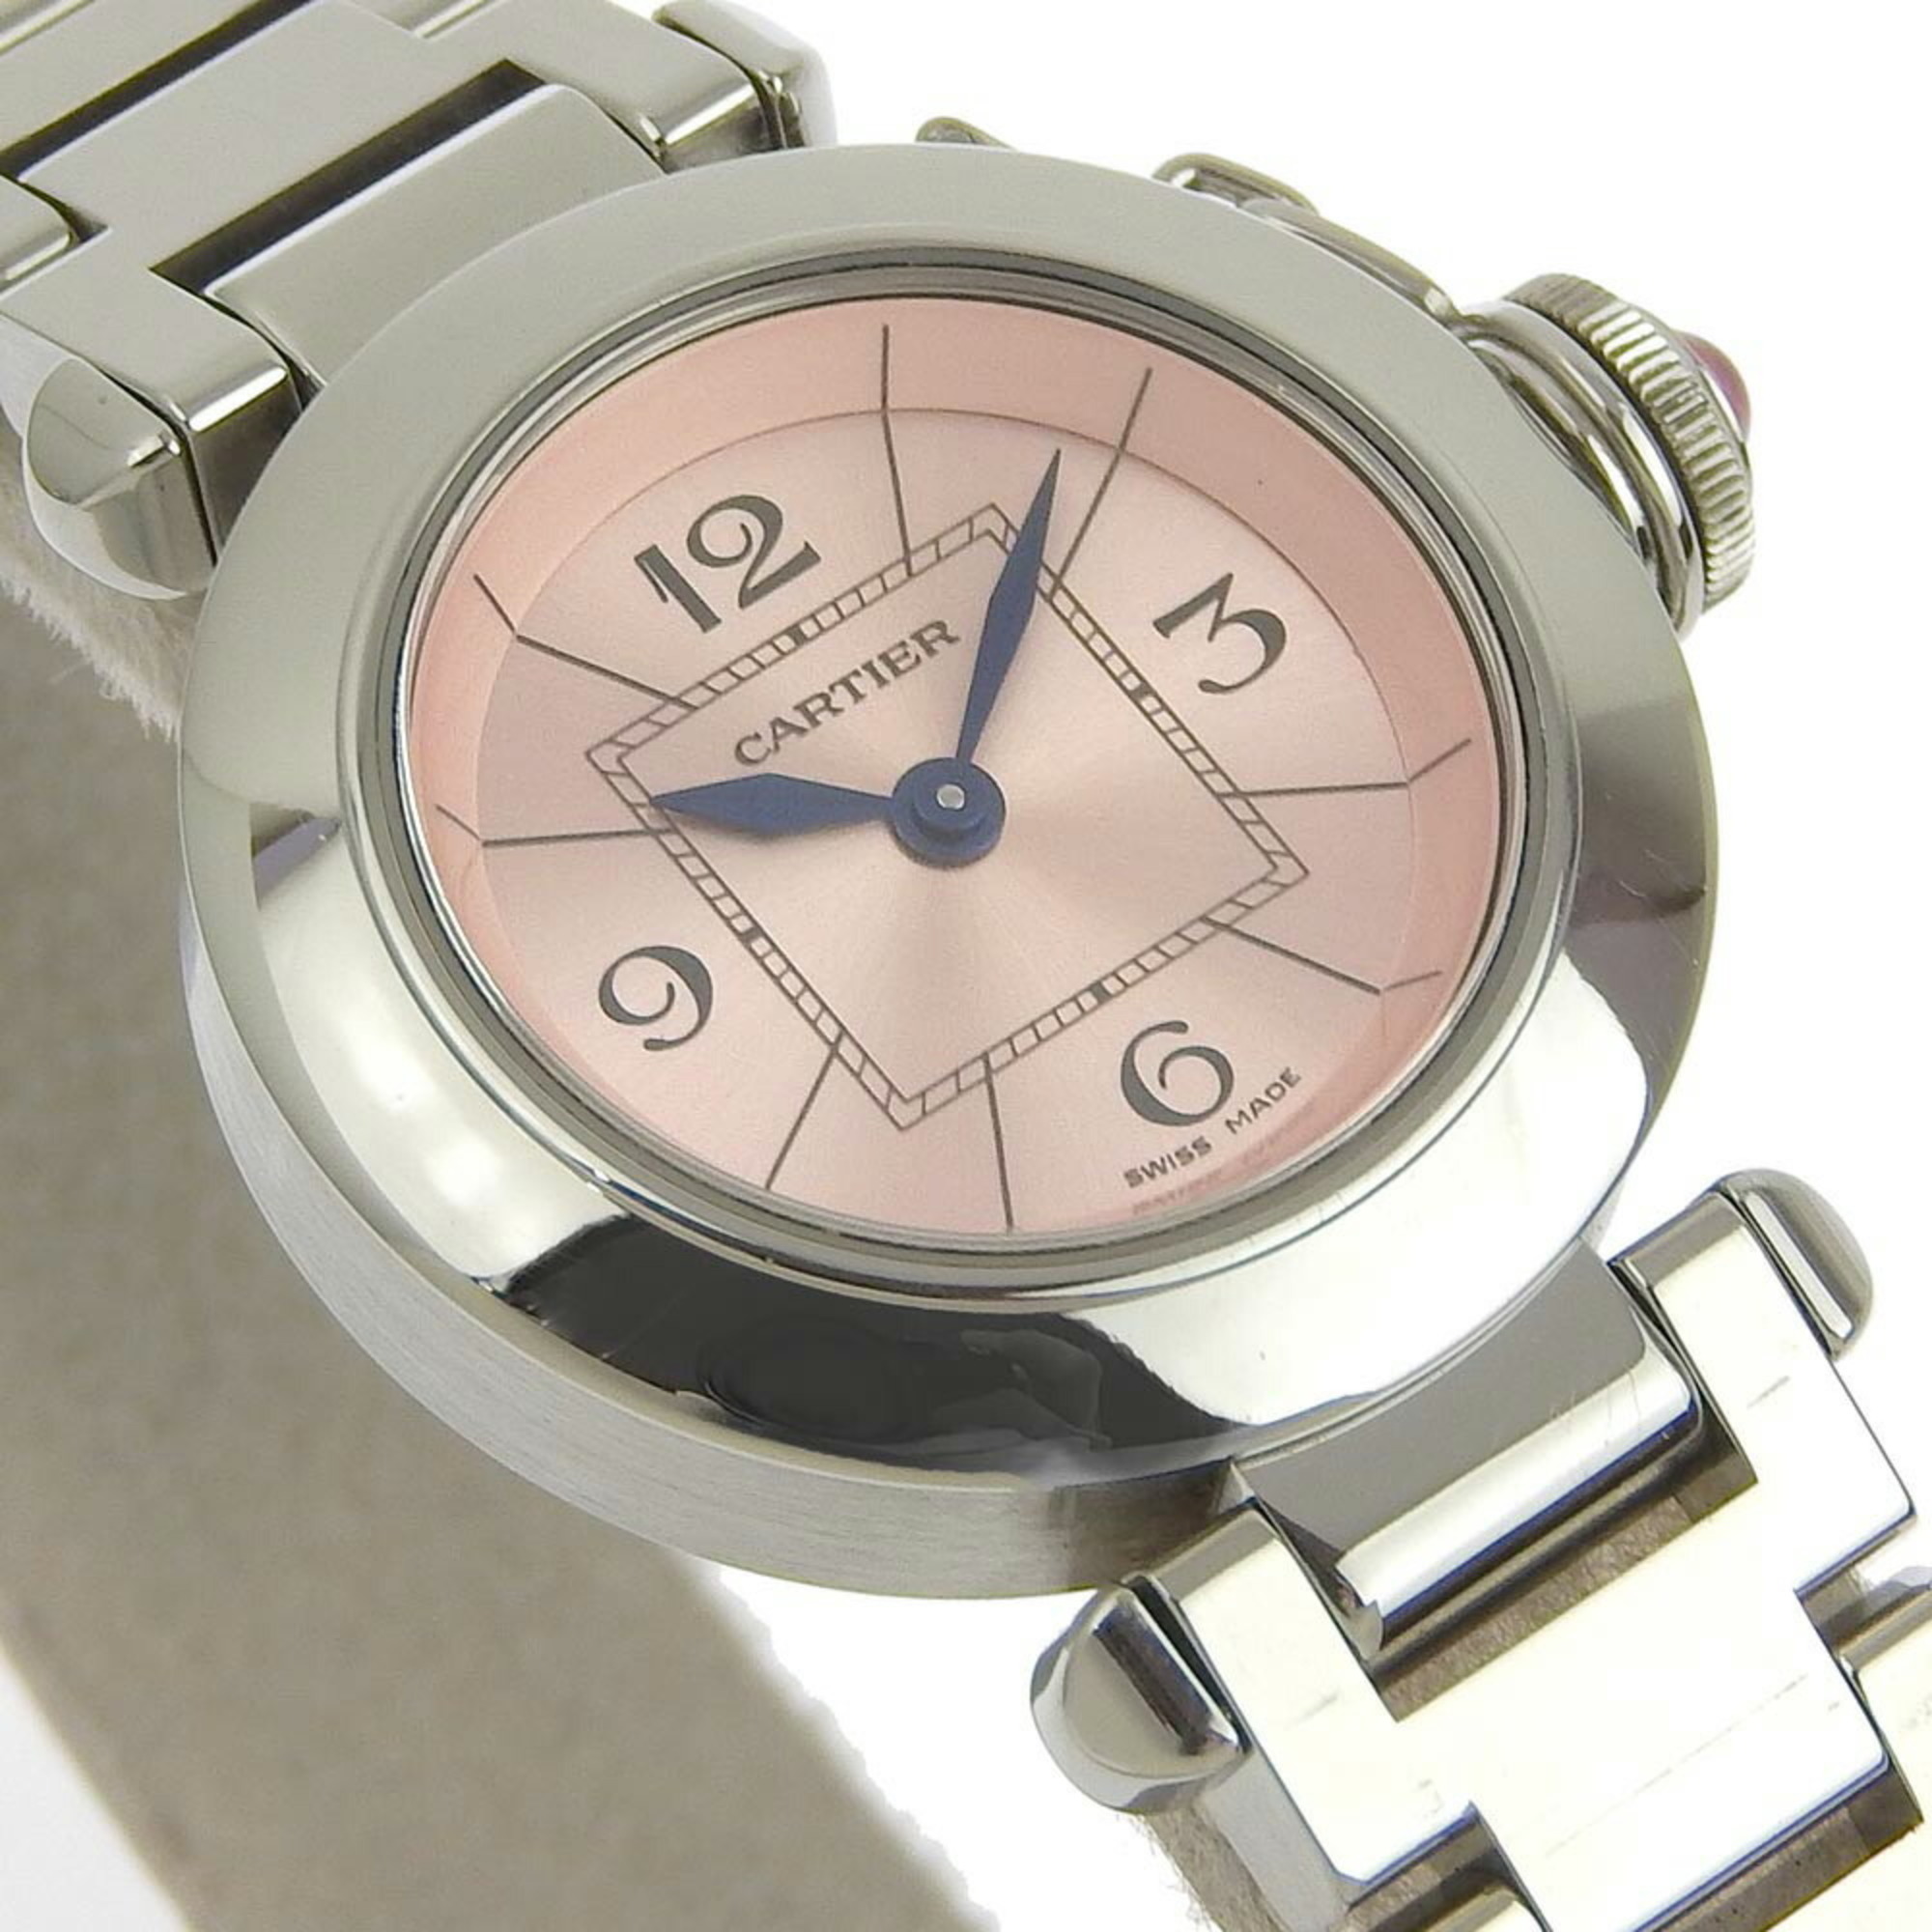 Cartier Mispasha Stainless Steel Quartz Analog Display Ladies Pink Dial Watch